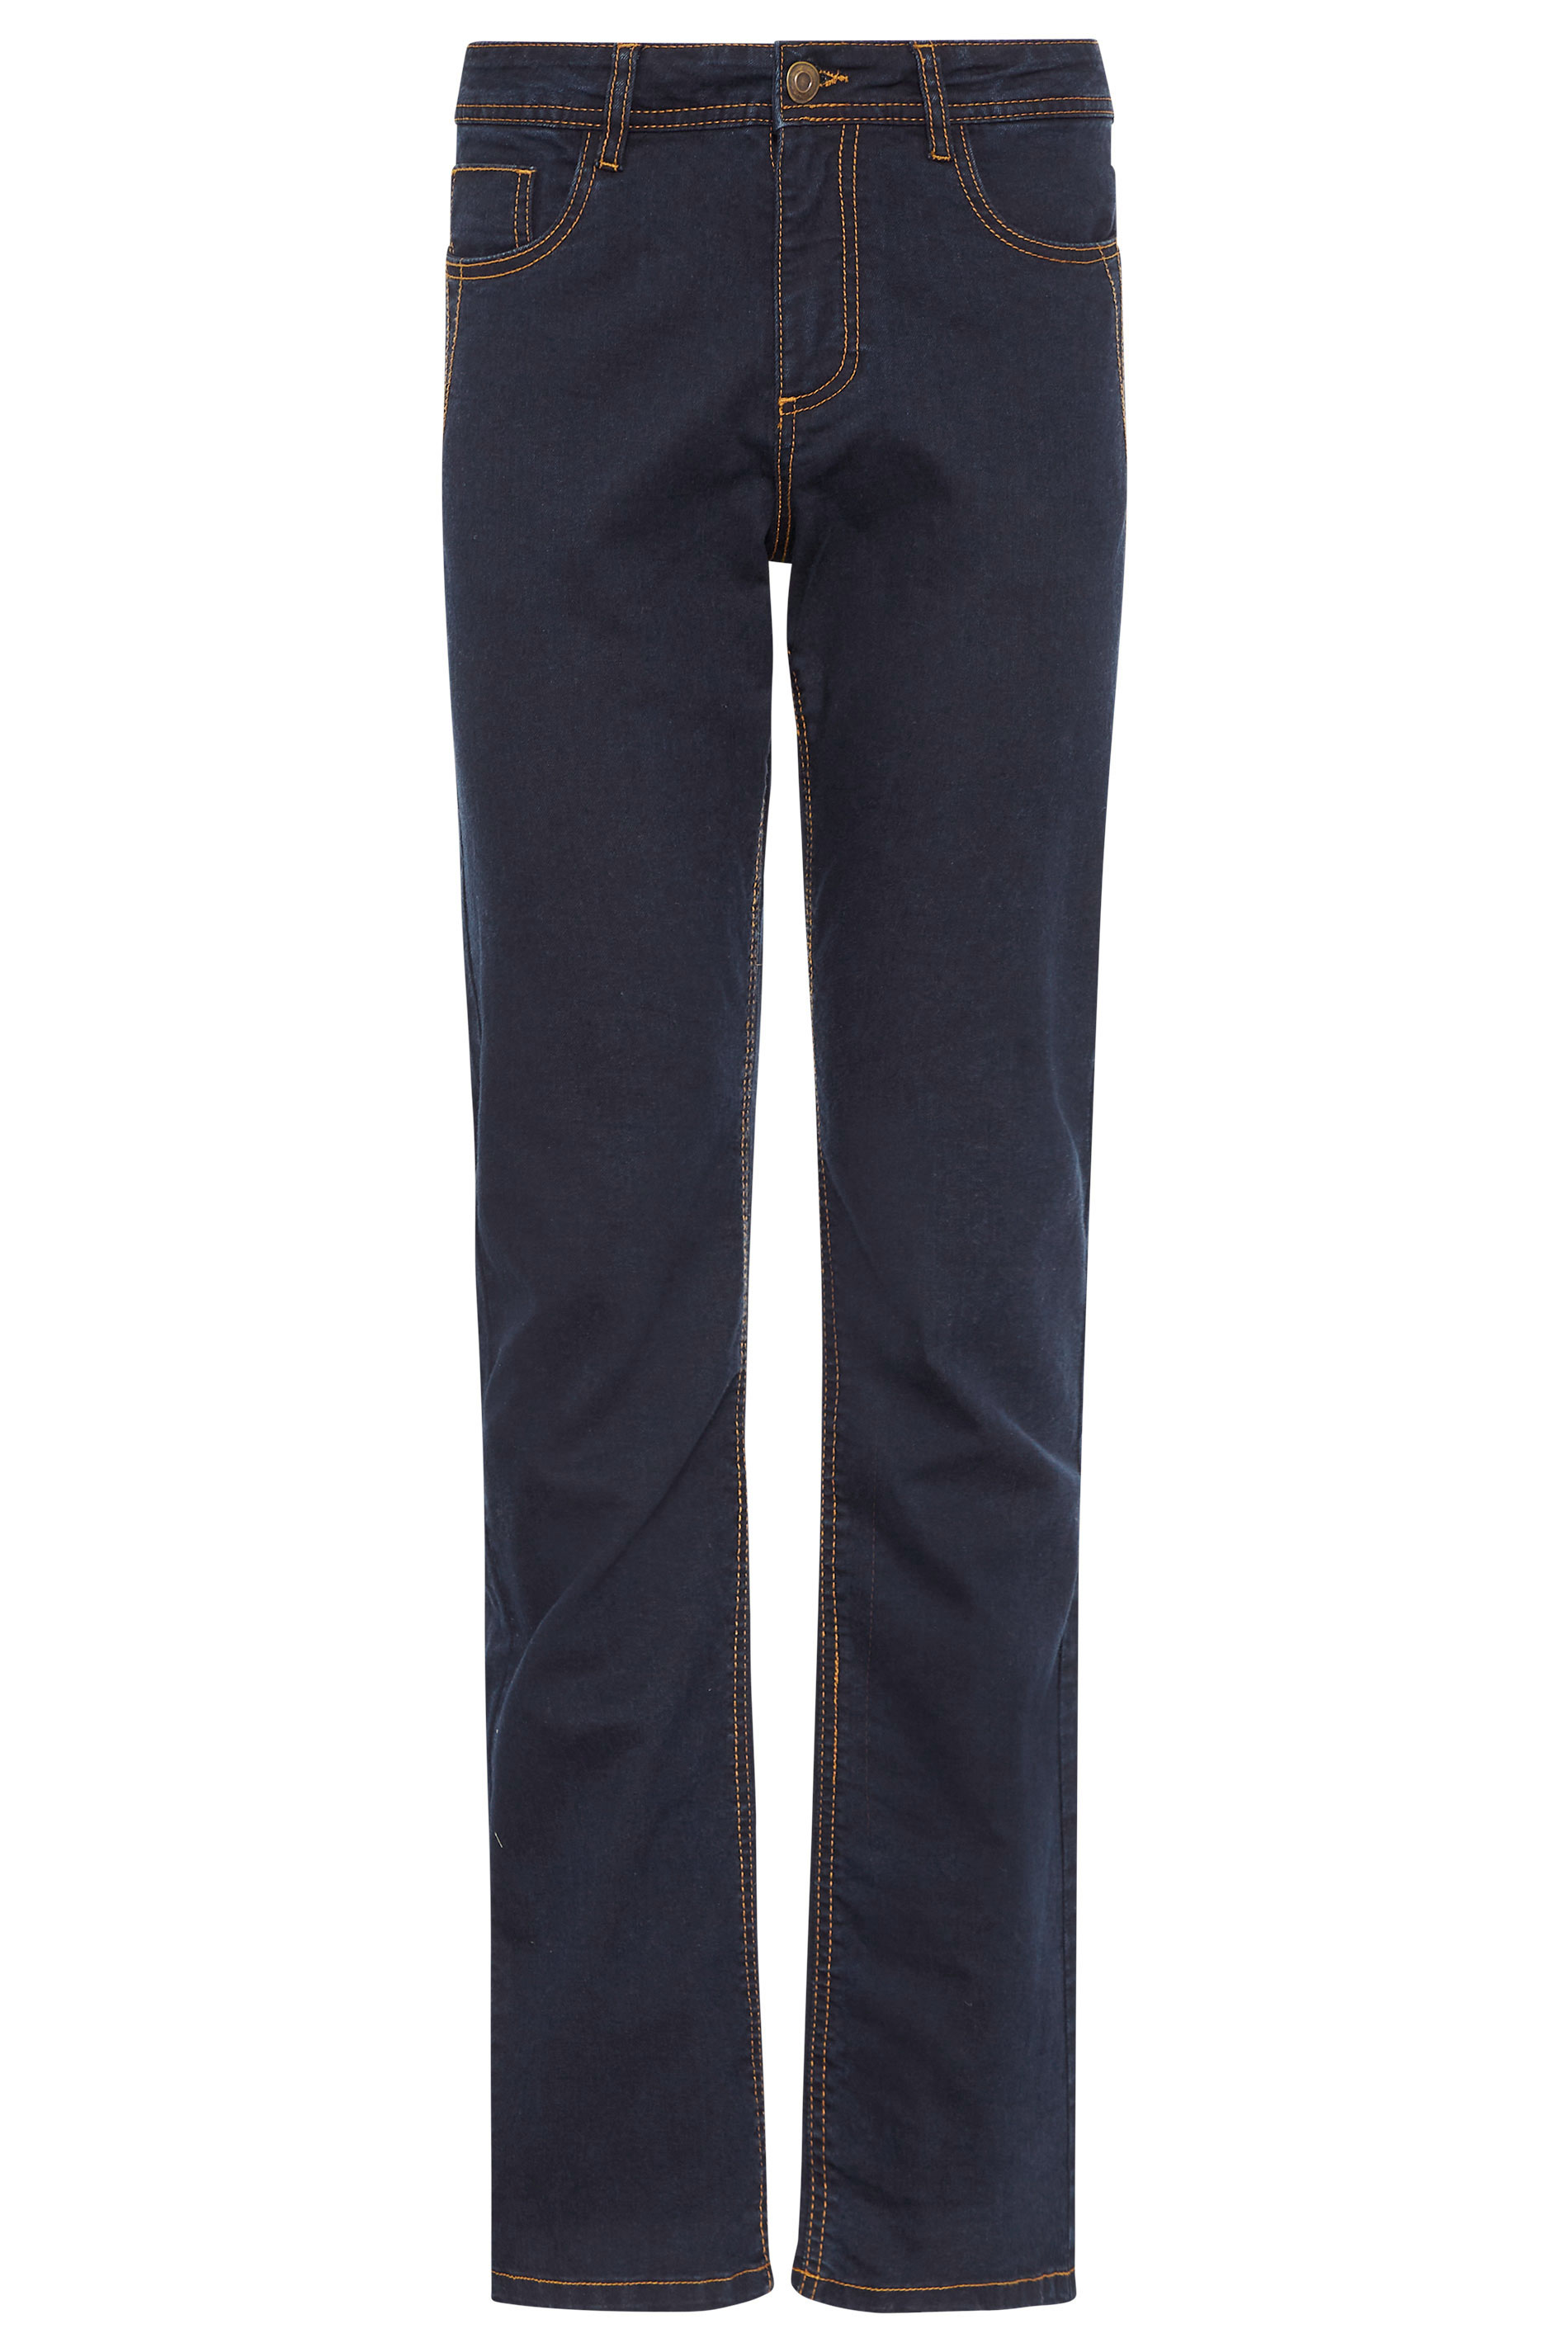 LTS MADE FOR GOOD Indigo Blue Straight Leg Denim Jeans | Long Tall Sally 2